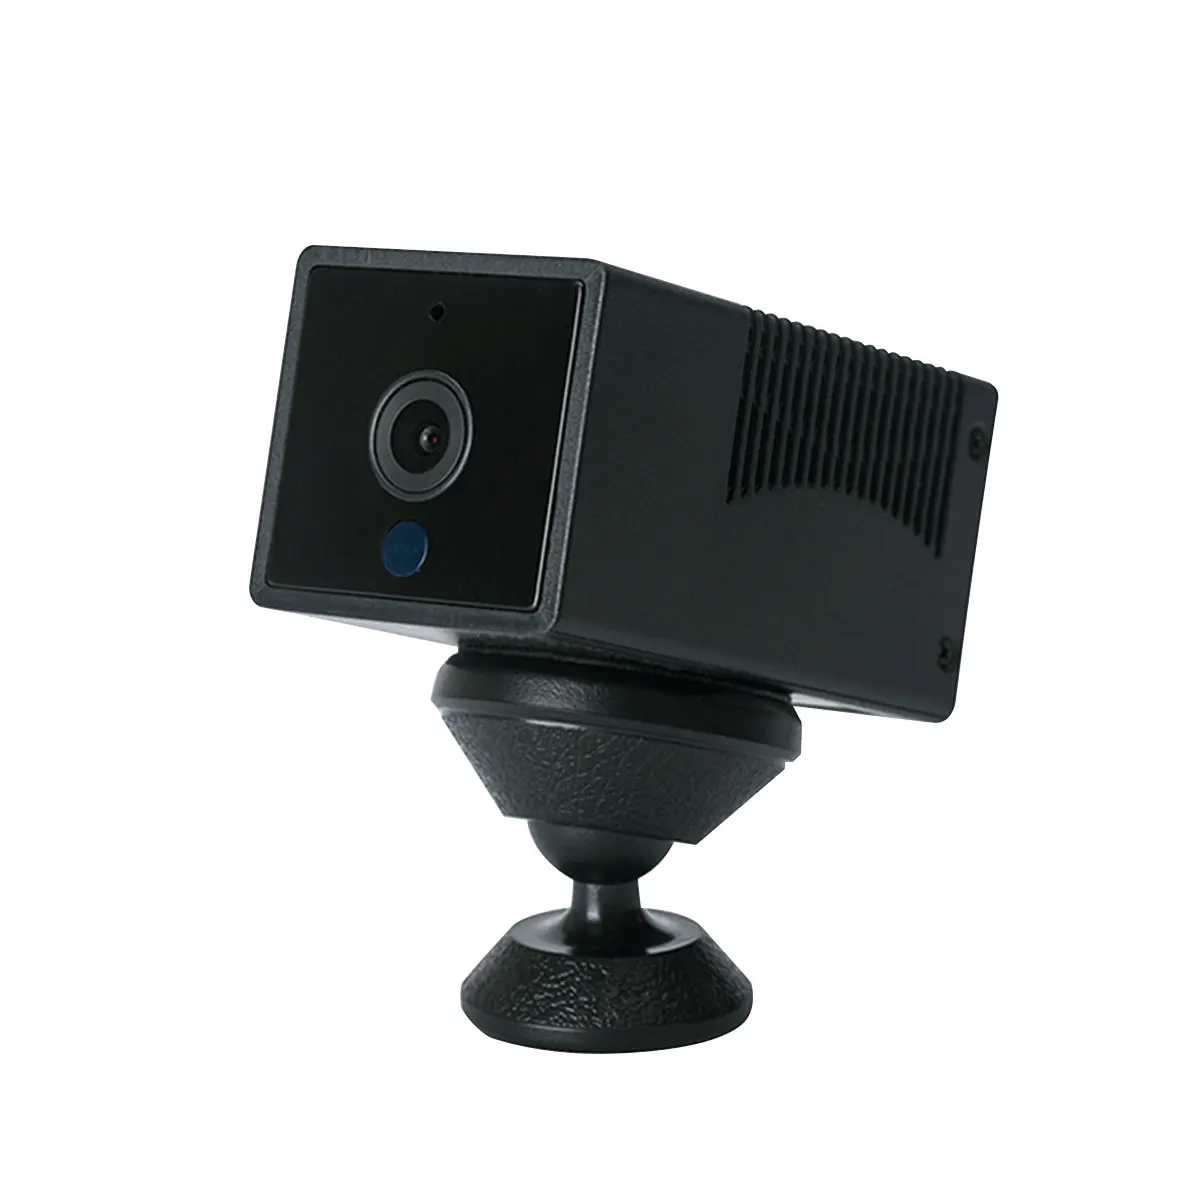 

ESCAM G17 MINI IP CAMERA 1080P Mini WiFi Night Vision Battery Camera with Audio Support AP Hotspot 64GB Card Video Recorder